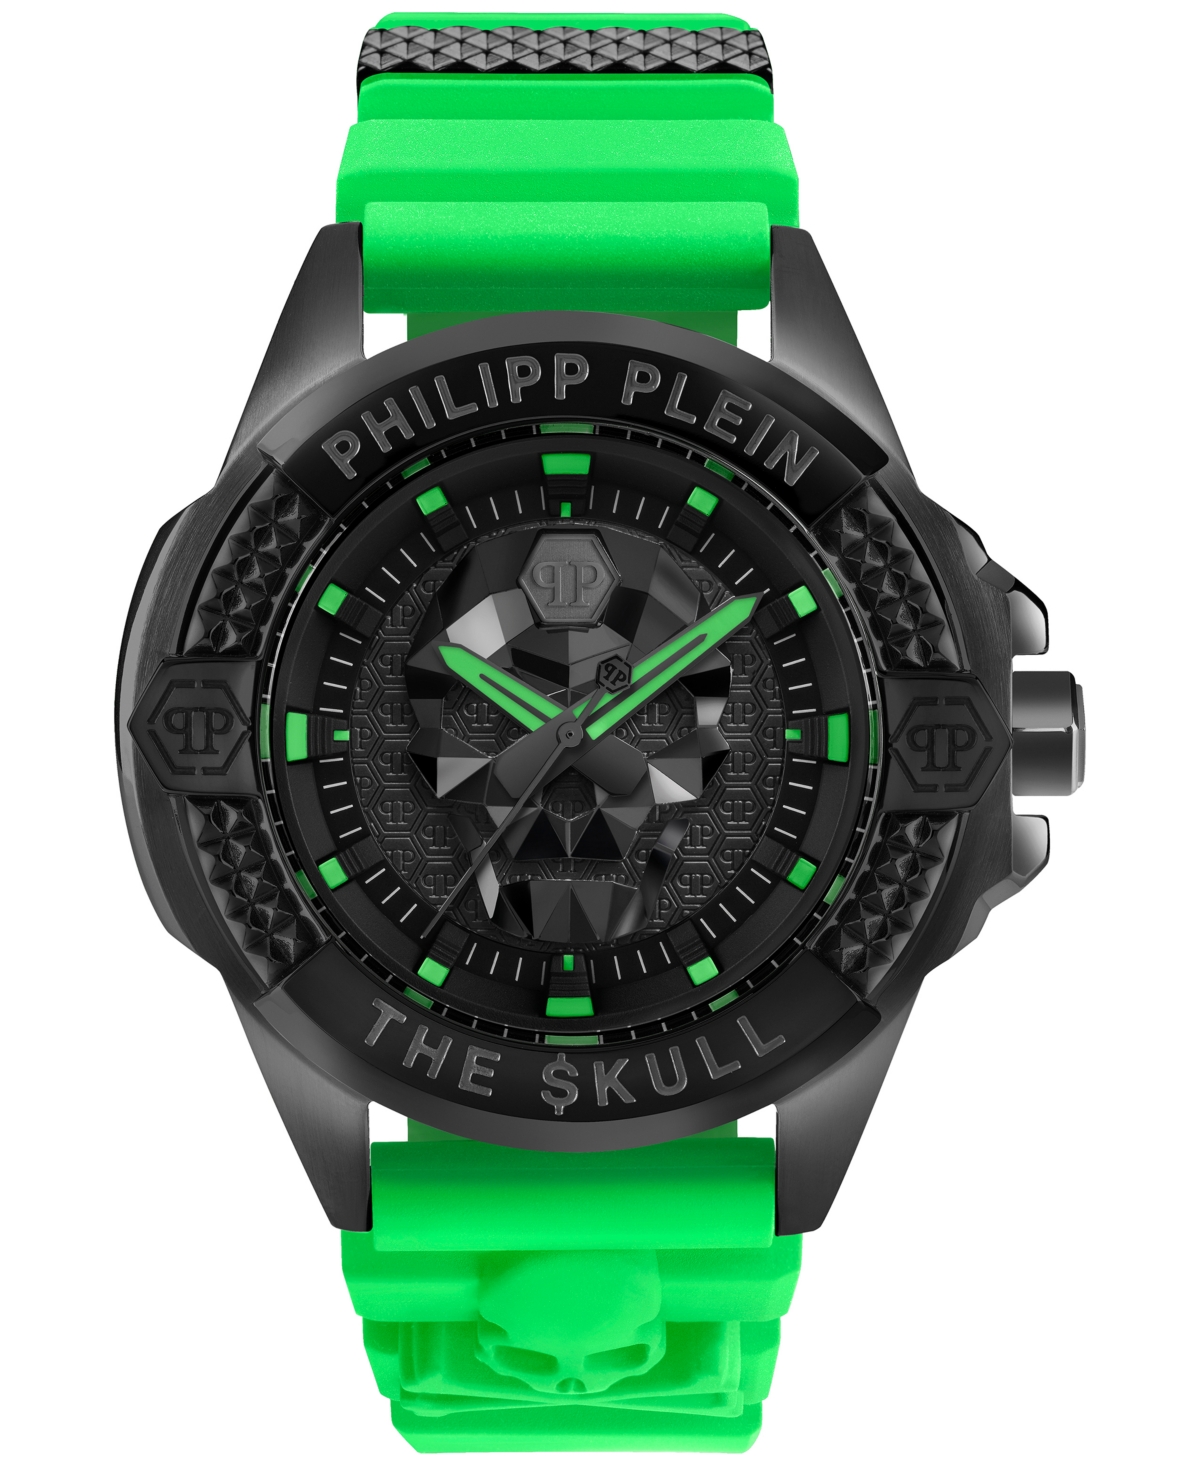 Philipp Plein Men's The Skull Green Silicone Strap Watch 44mm In Black